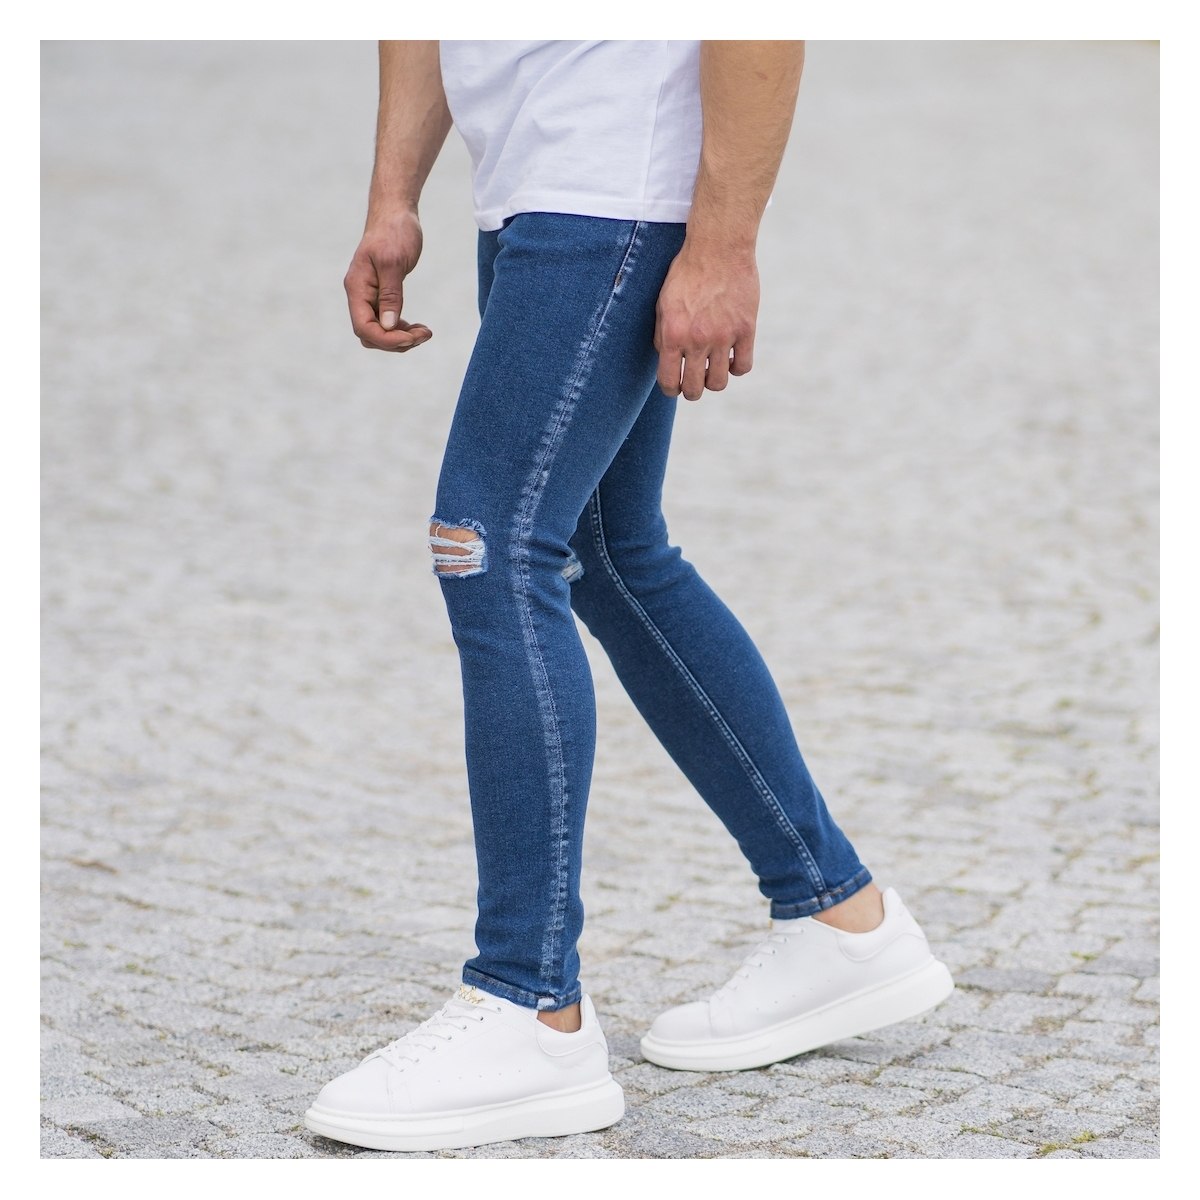 Herren Skinny Jeans mit Rissen in dunkelblau - 8